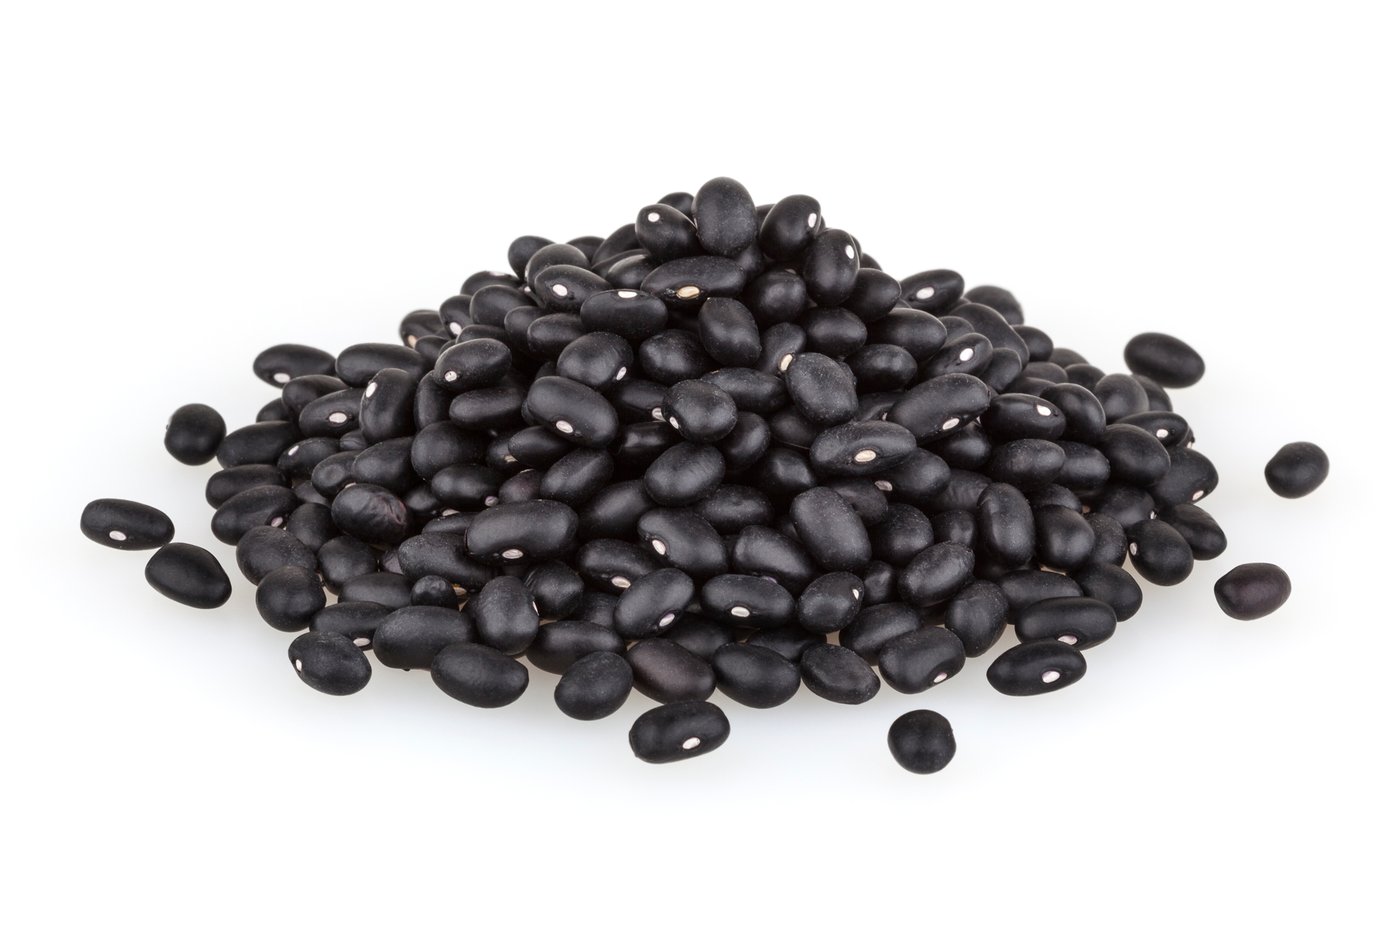 Organic Black Beans image zoom